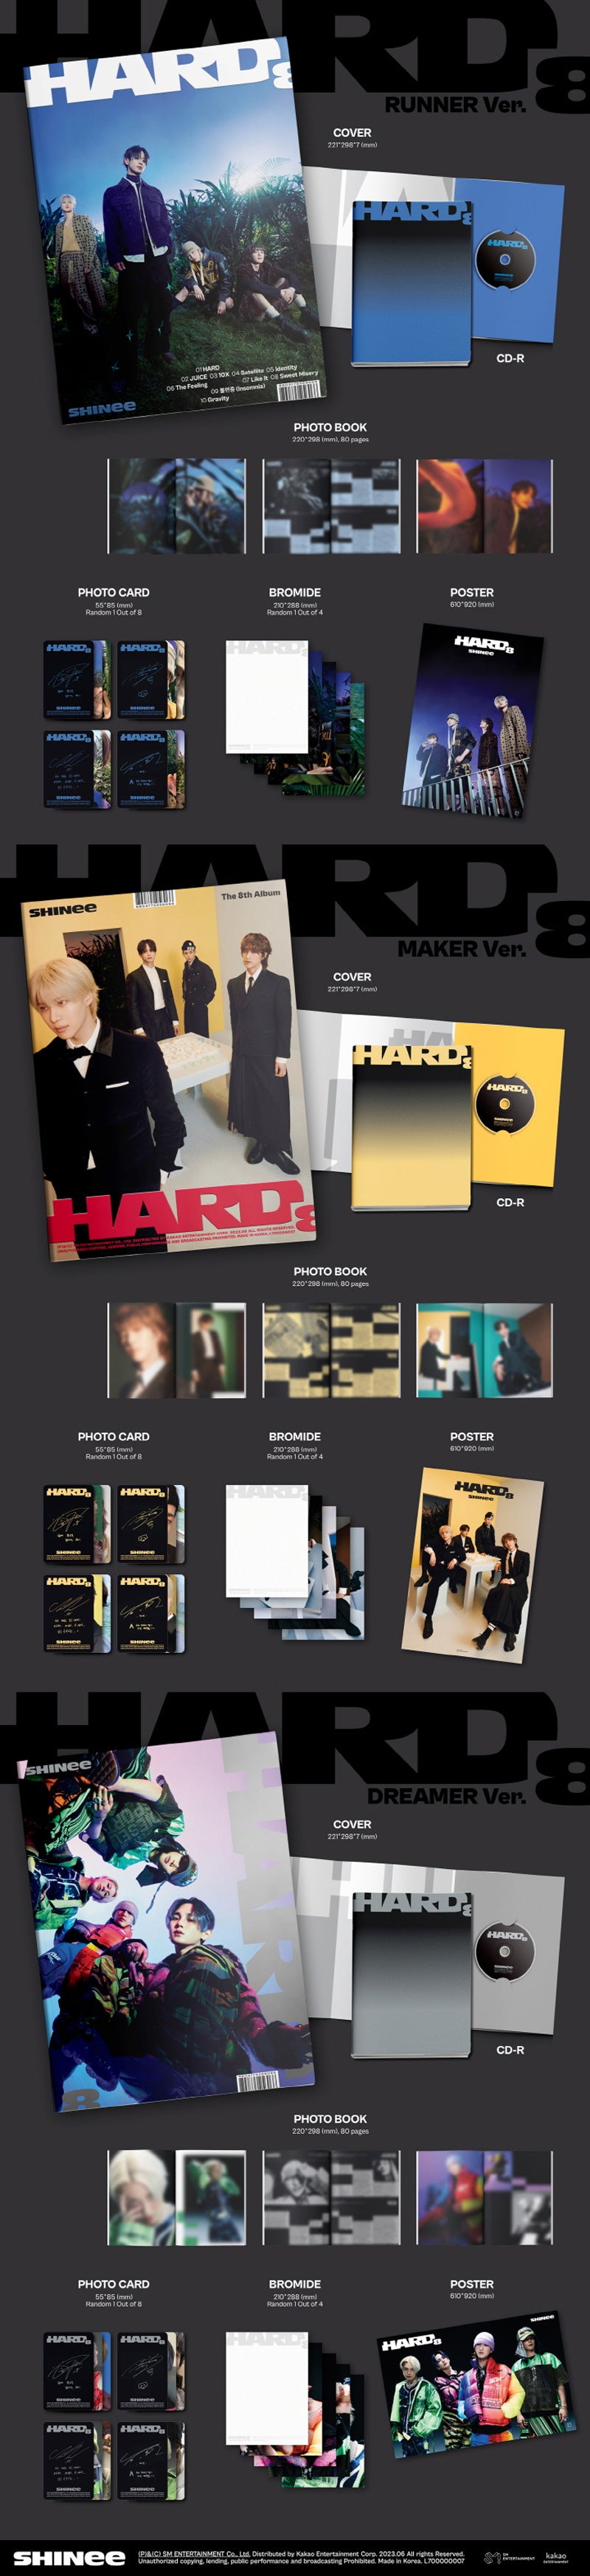 SHINee - HARD The 8th Album (Photo Book Ver.)